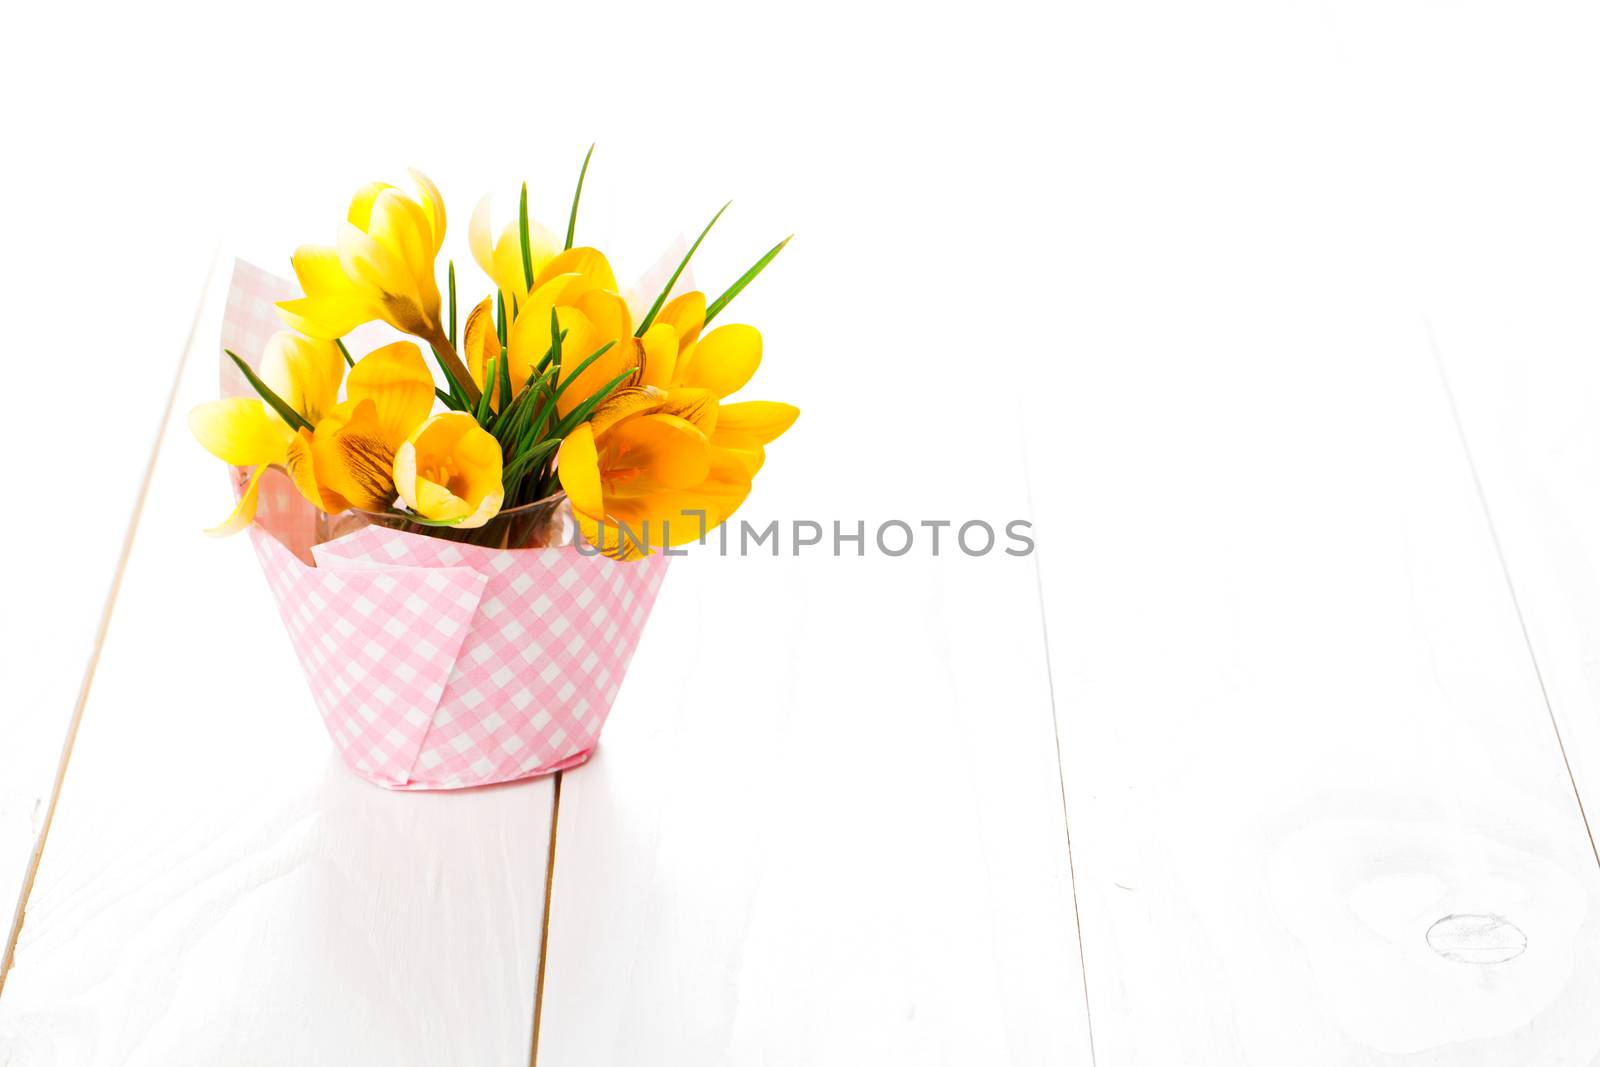 crocus flowers on white wooden background